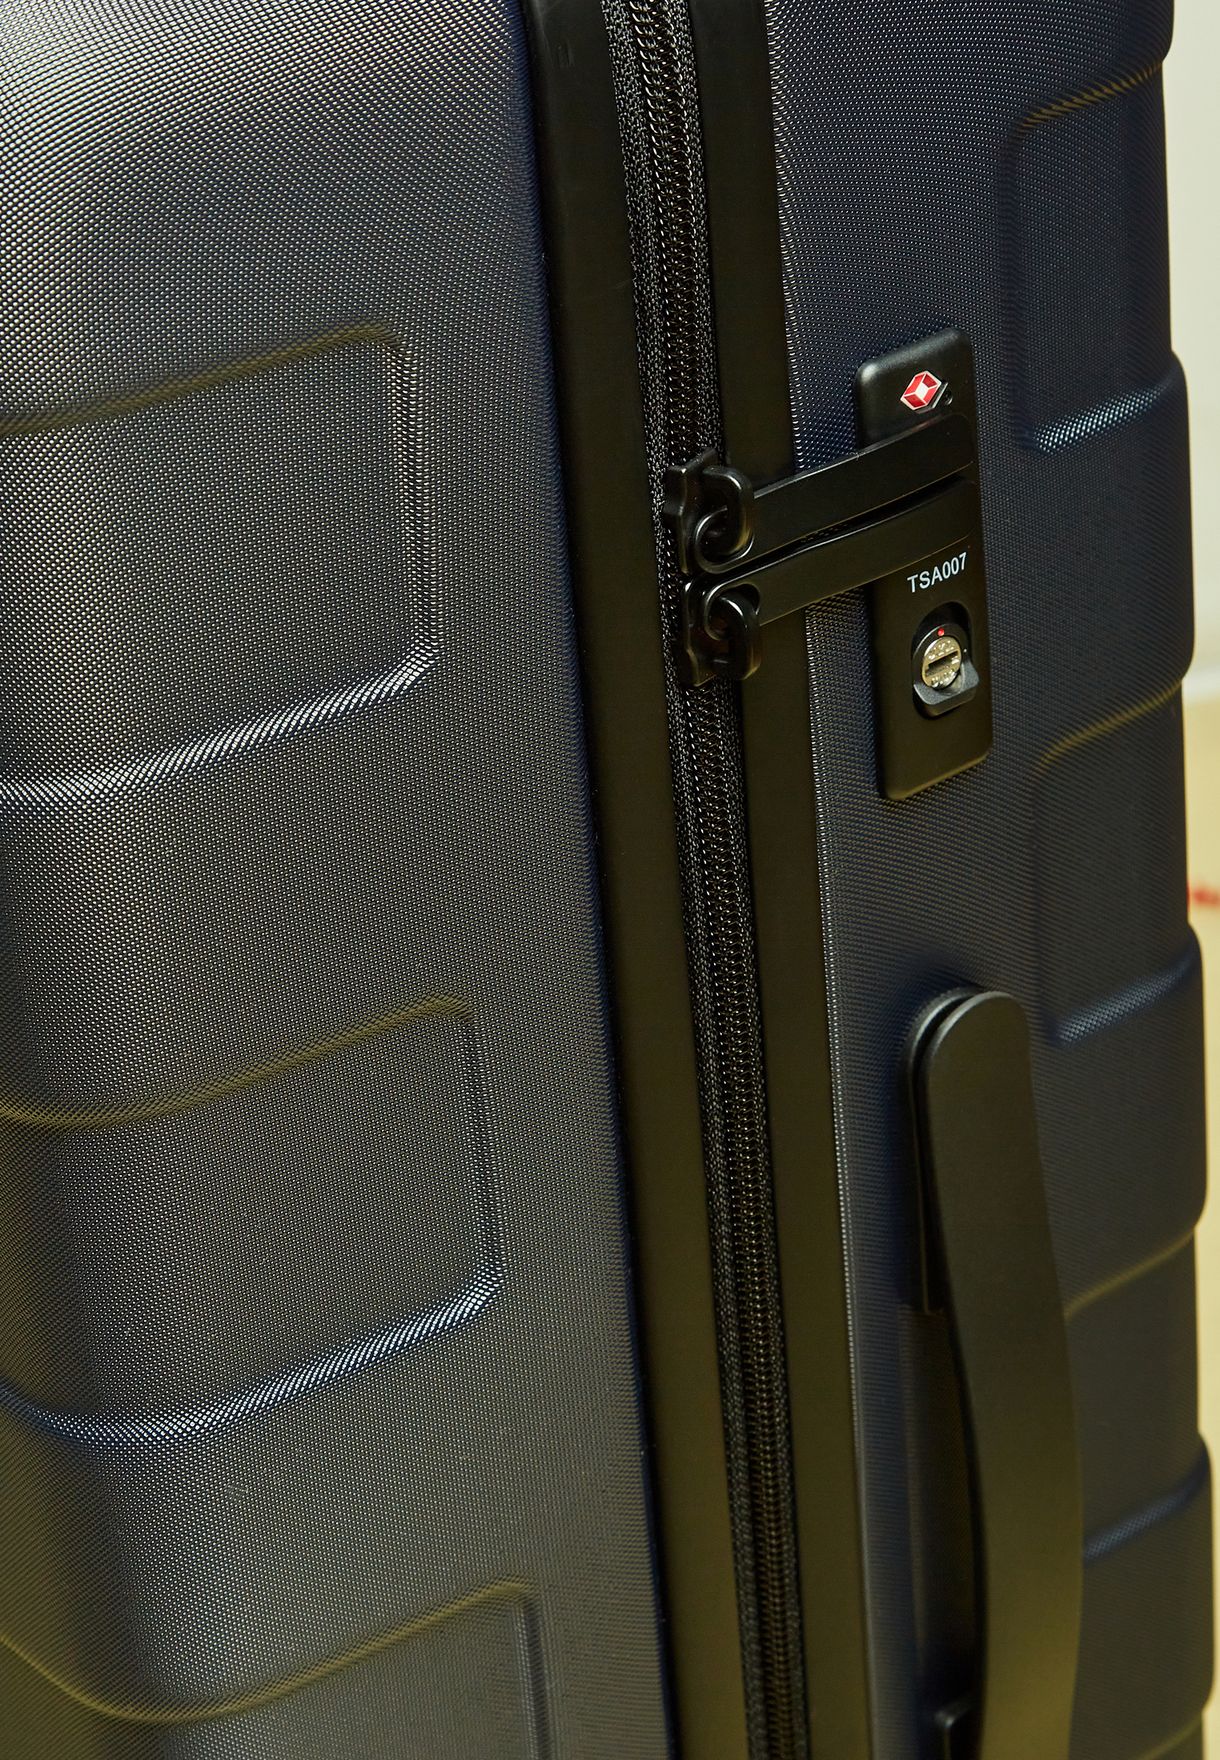 Handle Adjustable Hard Carry Suitcase 63L